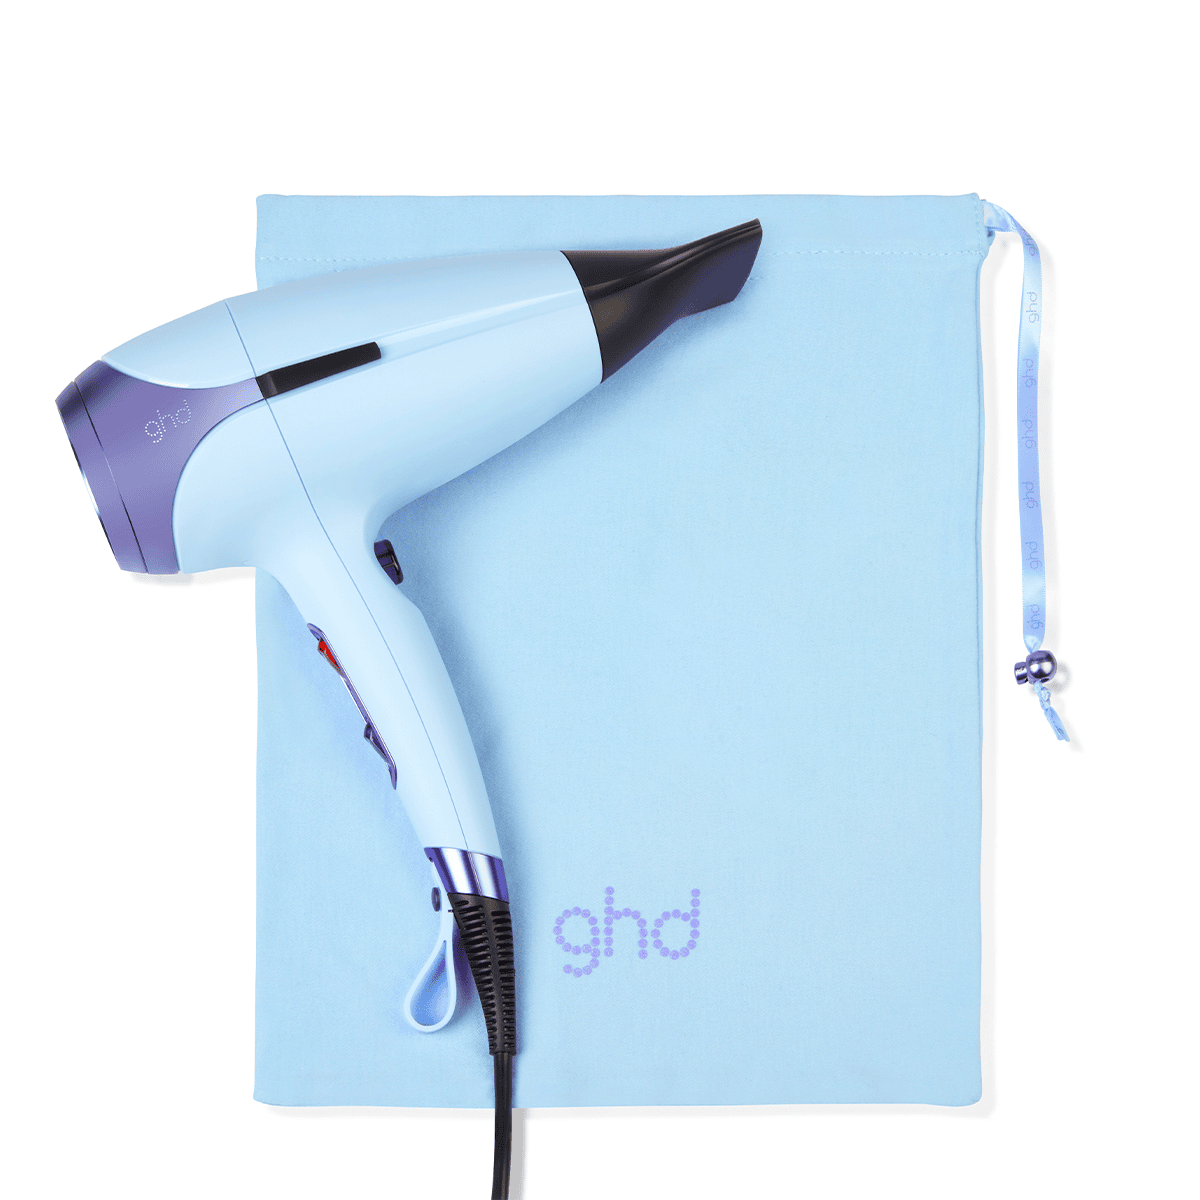 ghd • Helios sèche-cheveux iD Limited Edition Blue •